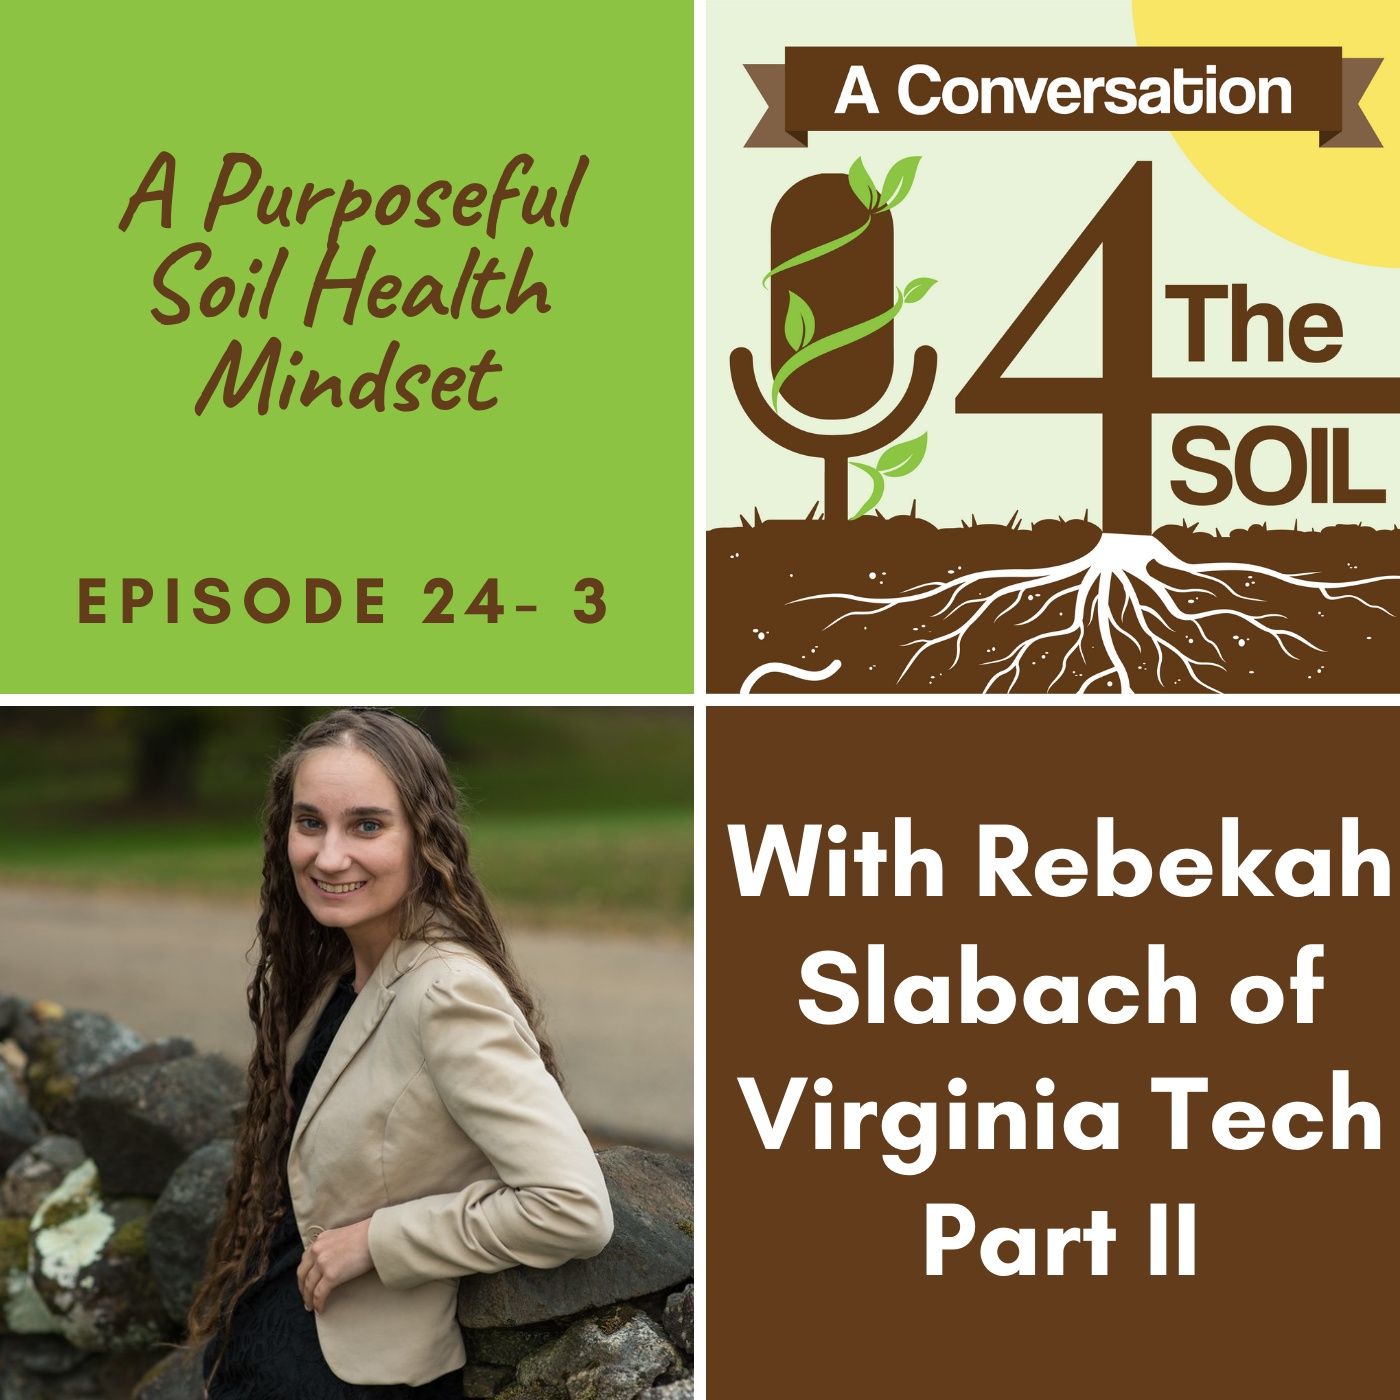 Episode 24 - 3: A Purposeful Soil Health Mindset with Rebekah Slabach of Virginia Tech Part II